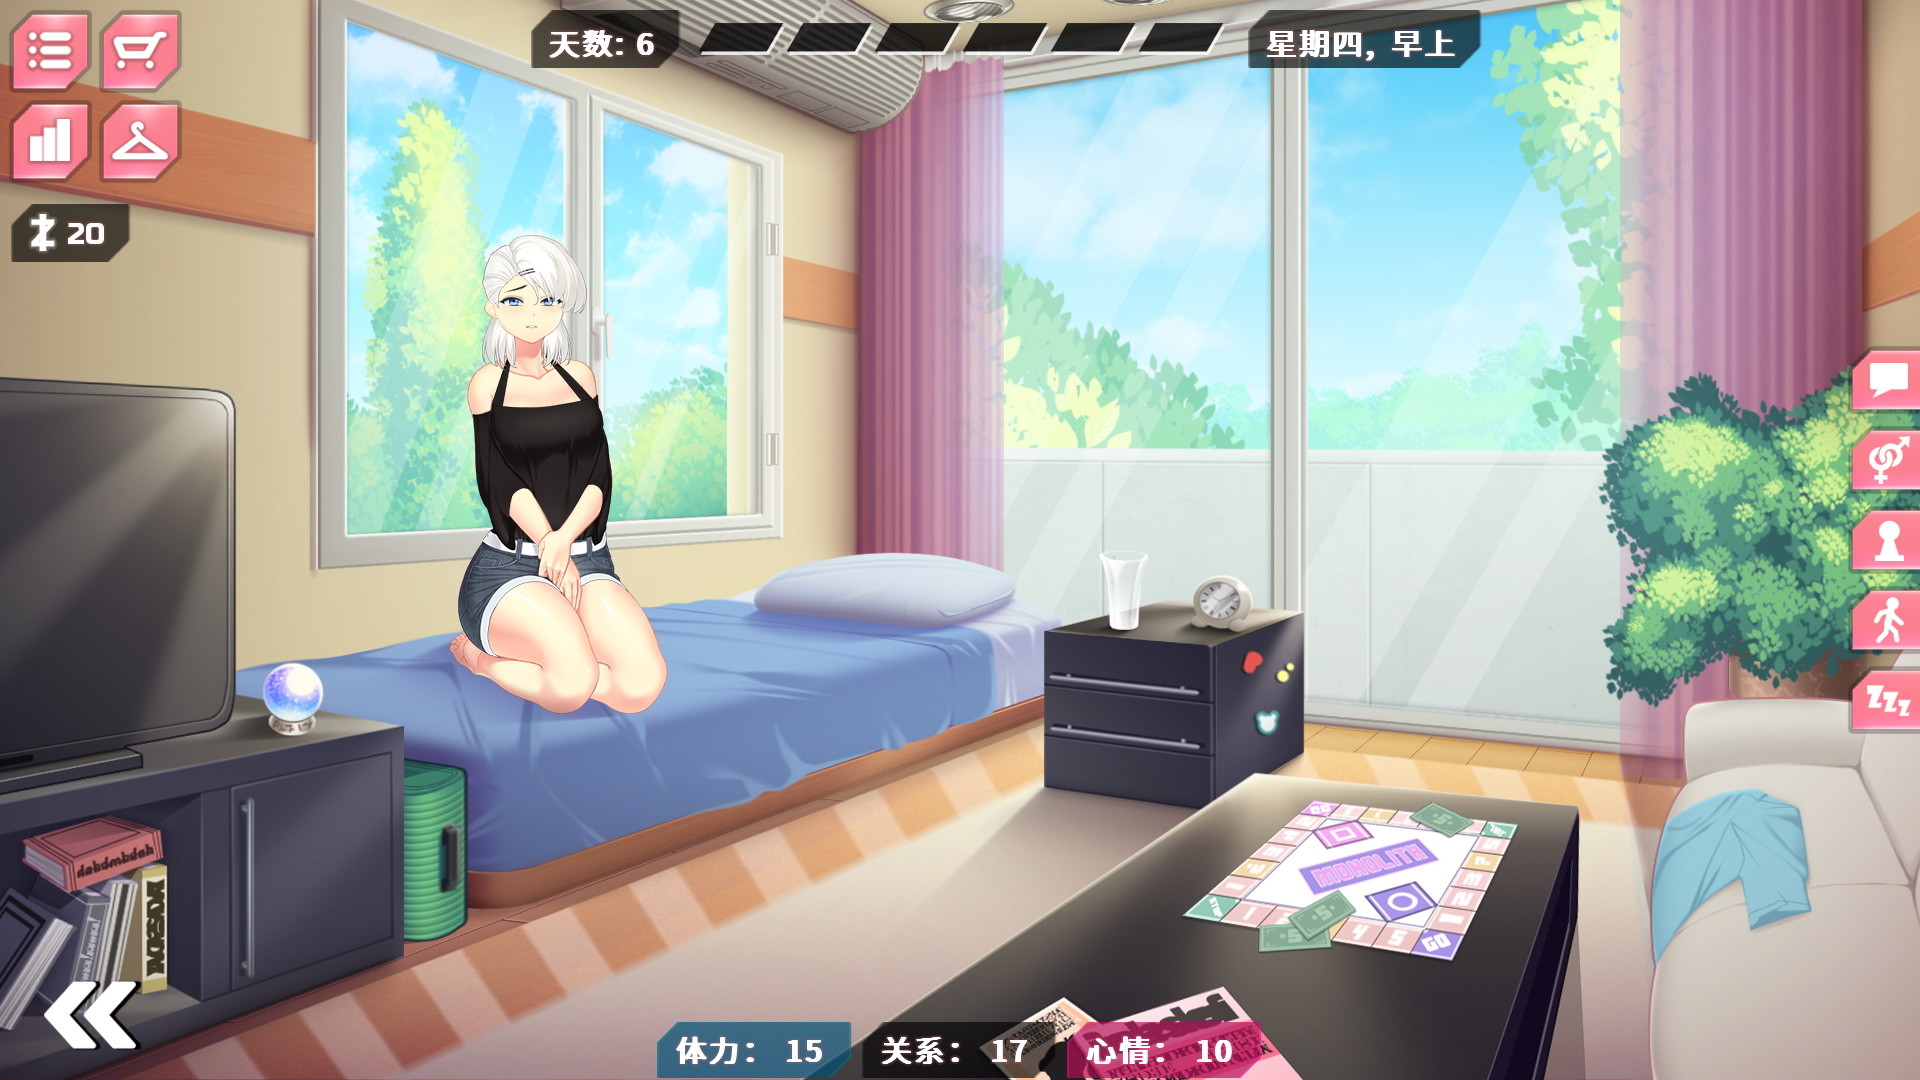 【SLG/中文】她的新回忆 无尽模拟器 v1.0.998 Steam官方中文版【1G】